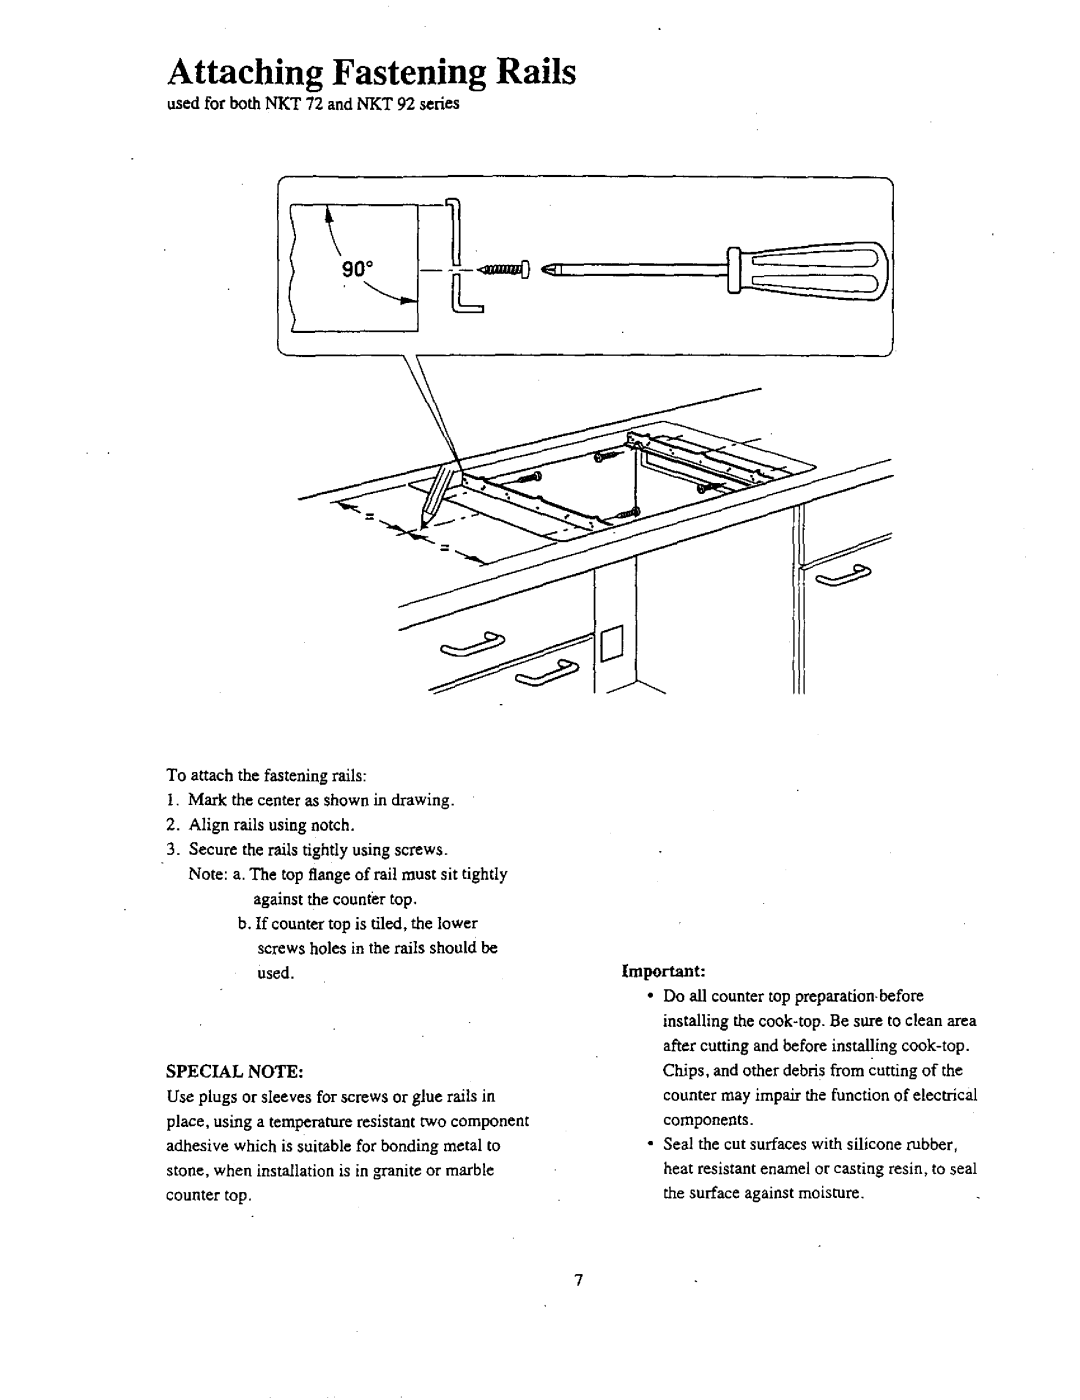 Bosch Appliances NKT 92, NKT 72 instruction manual Attaching Fastening Rails 